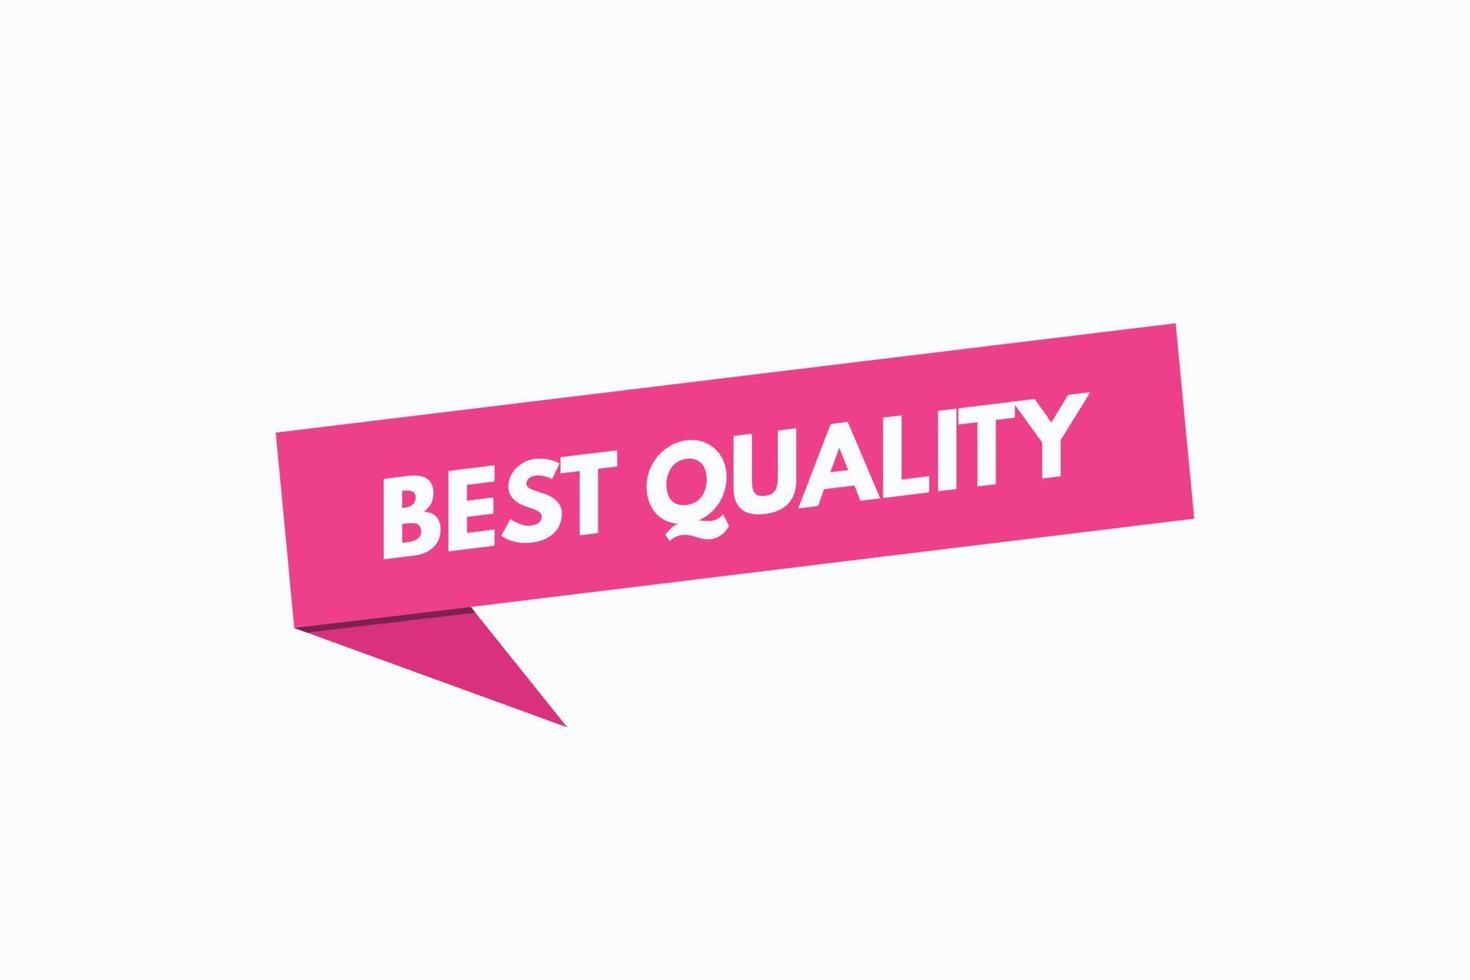 best quality button vectors.sign label speech bubblebest quality vector